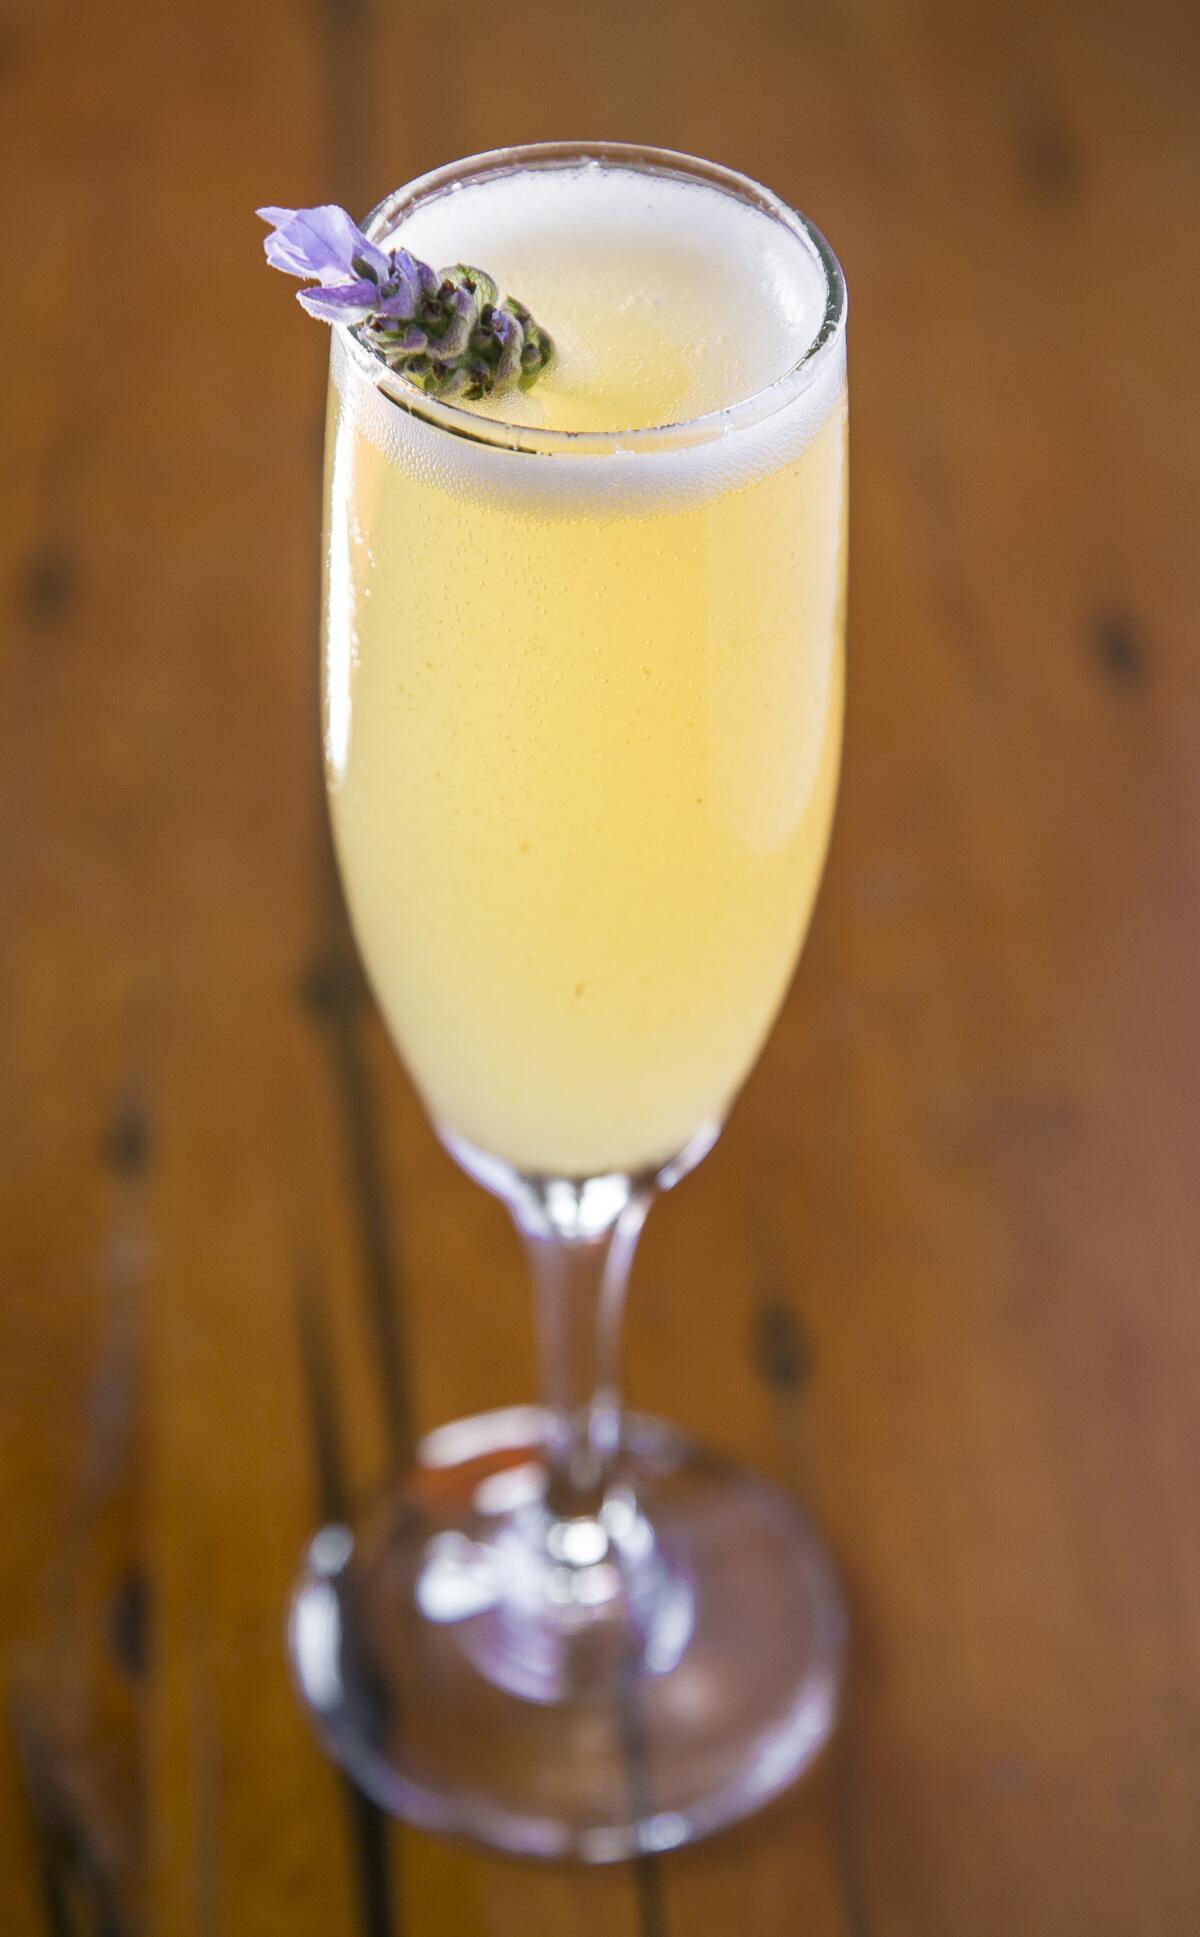 A mimosa at Bloom Restaurant + Bar in San Juan Capistrano.